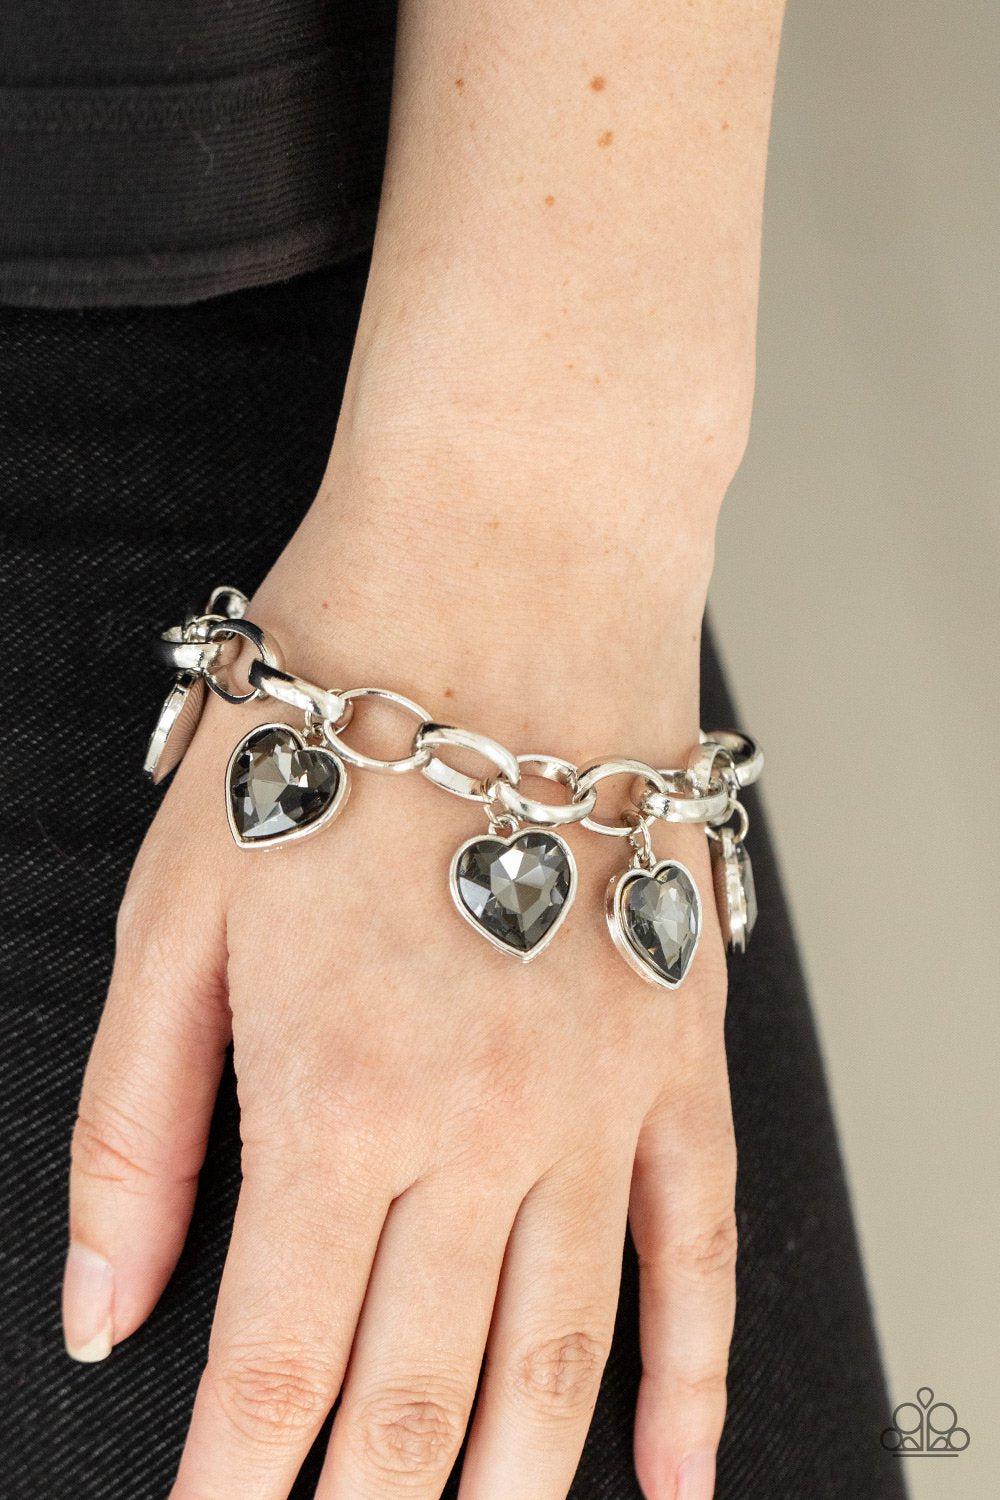 Order Sterling Silver Heart Charm Bracelet